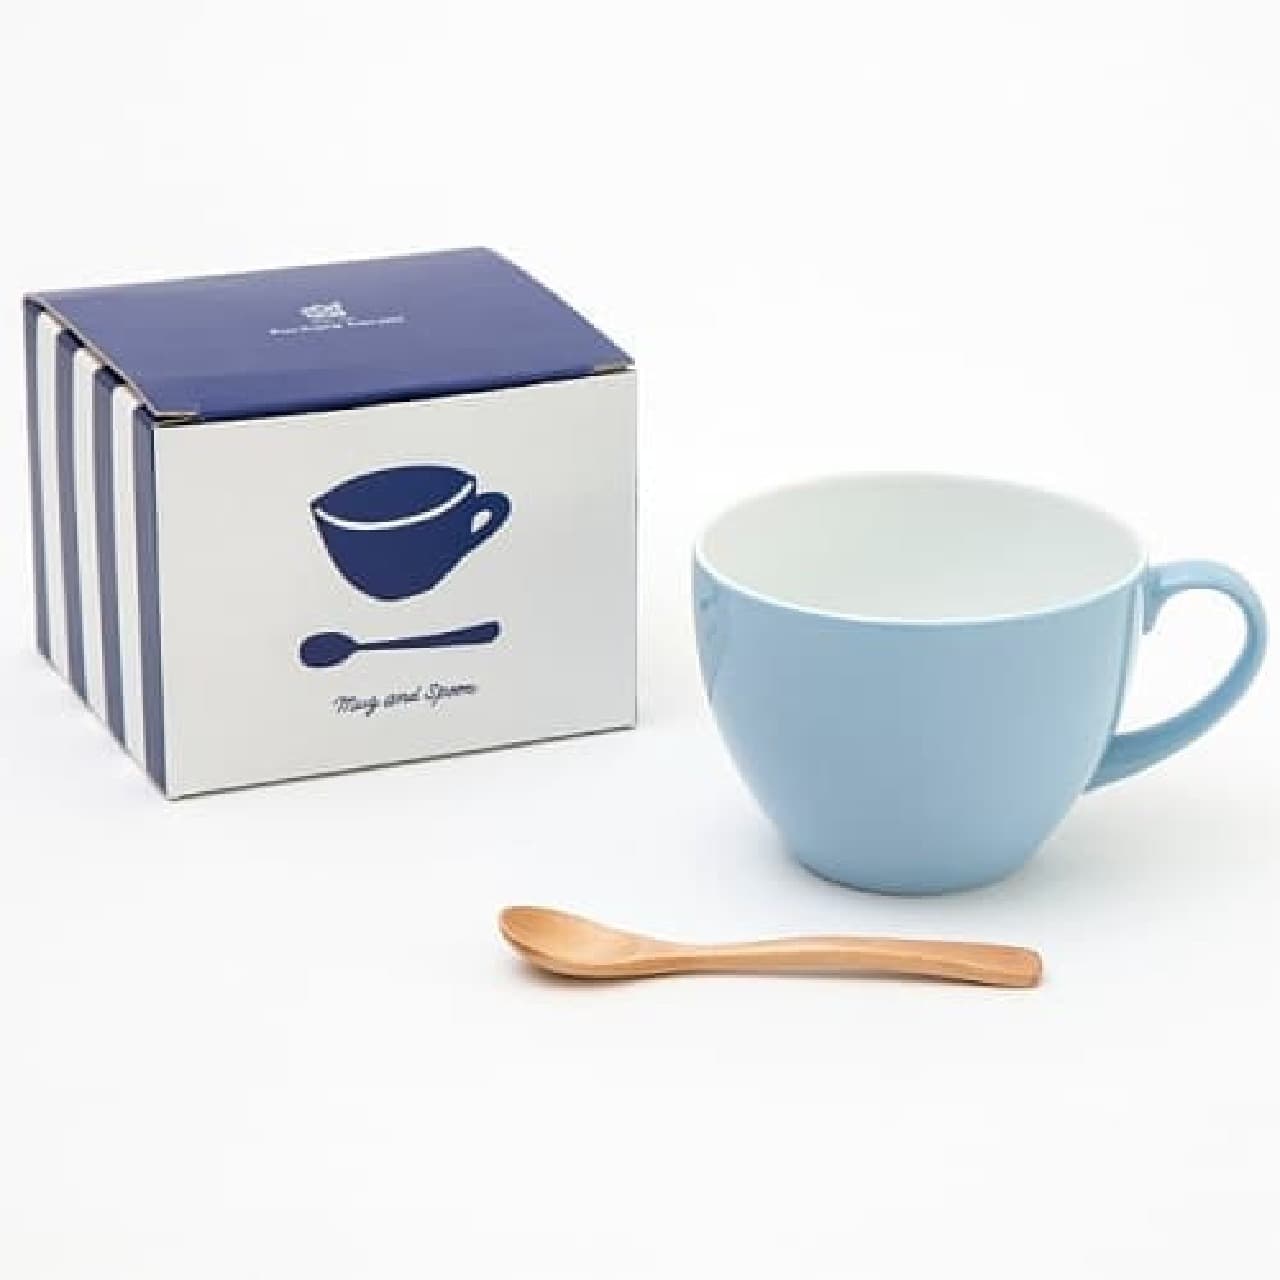 With big mug / spoon (sax blue)